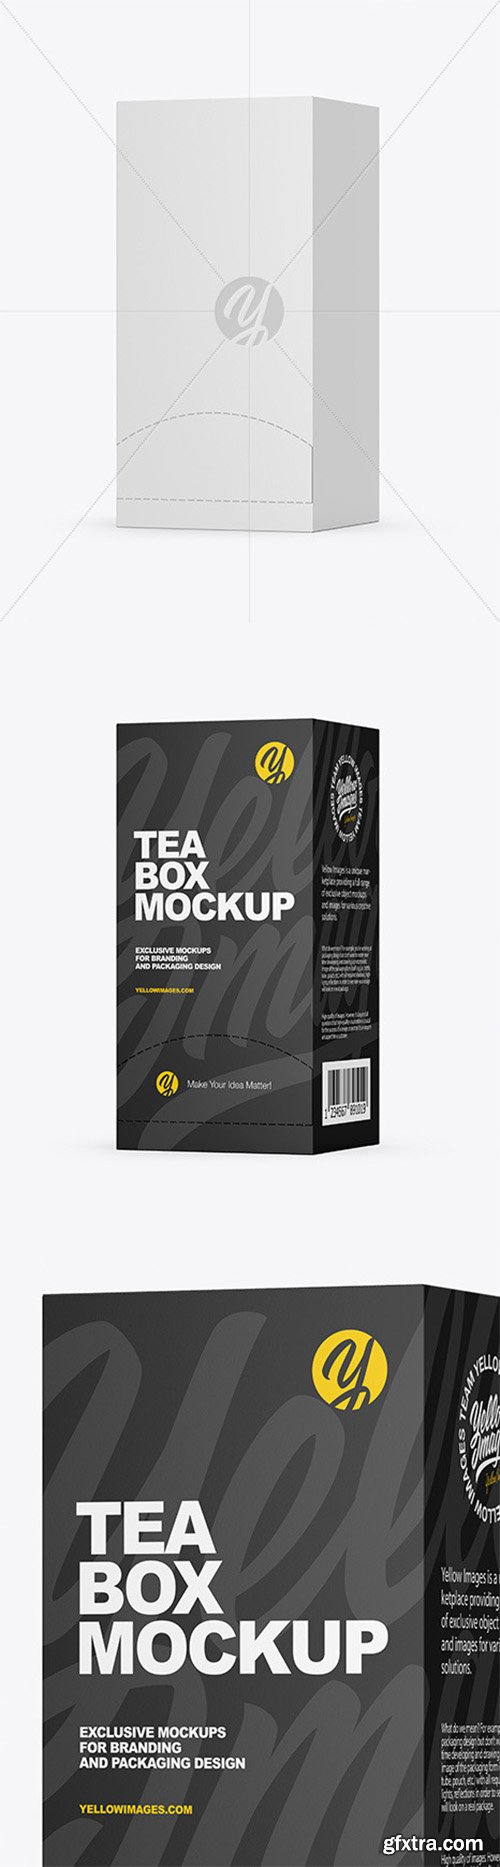 Download Tea Box Mockup Psd Download Free And Premium Psd Mockup Templates And Design Assets PSD Mockup Templates